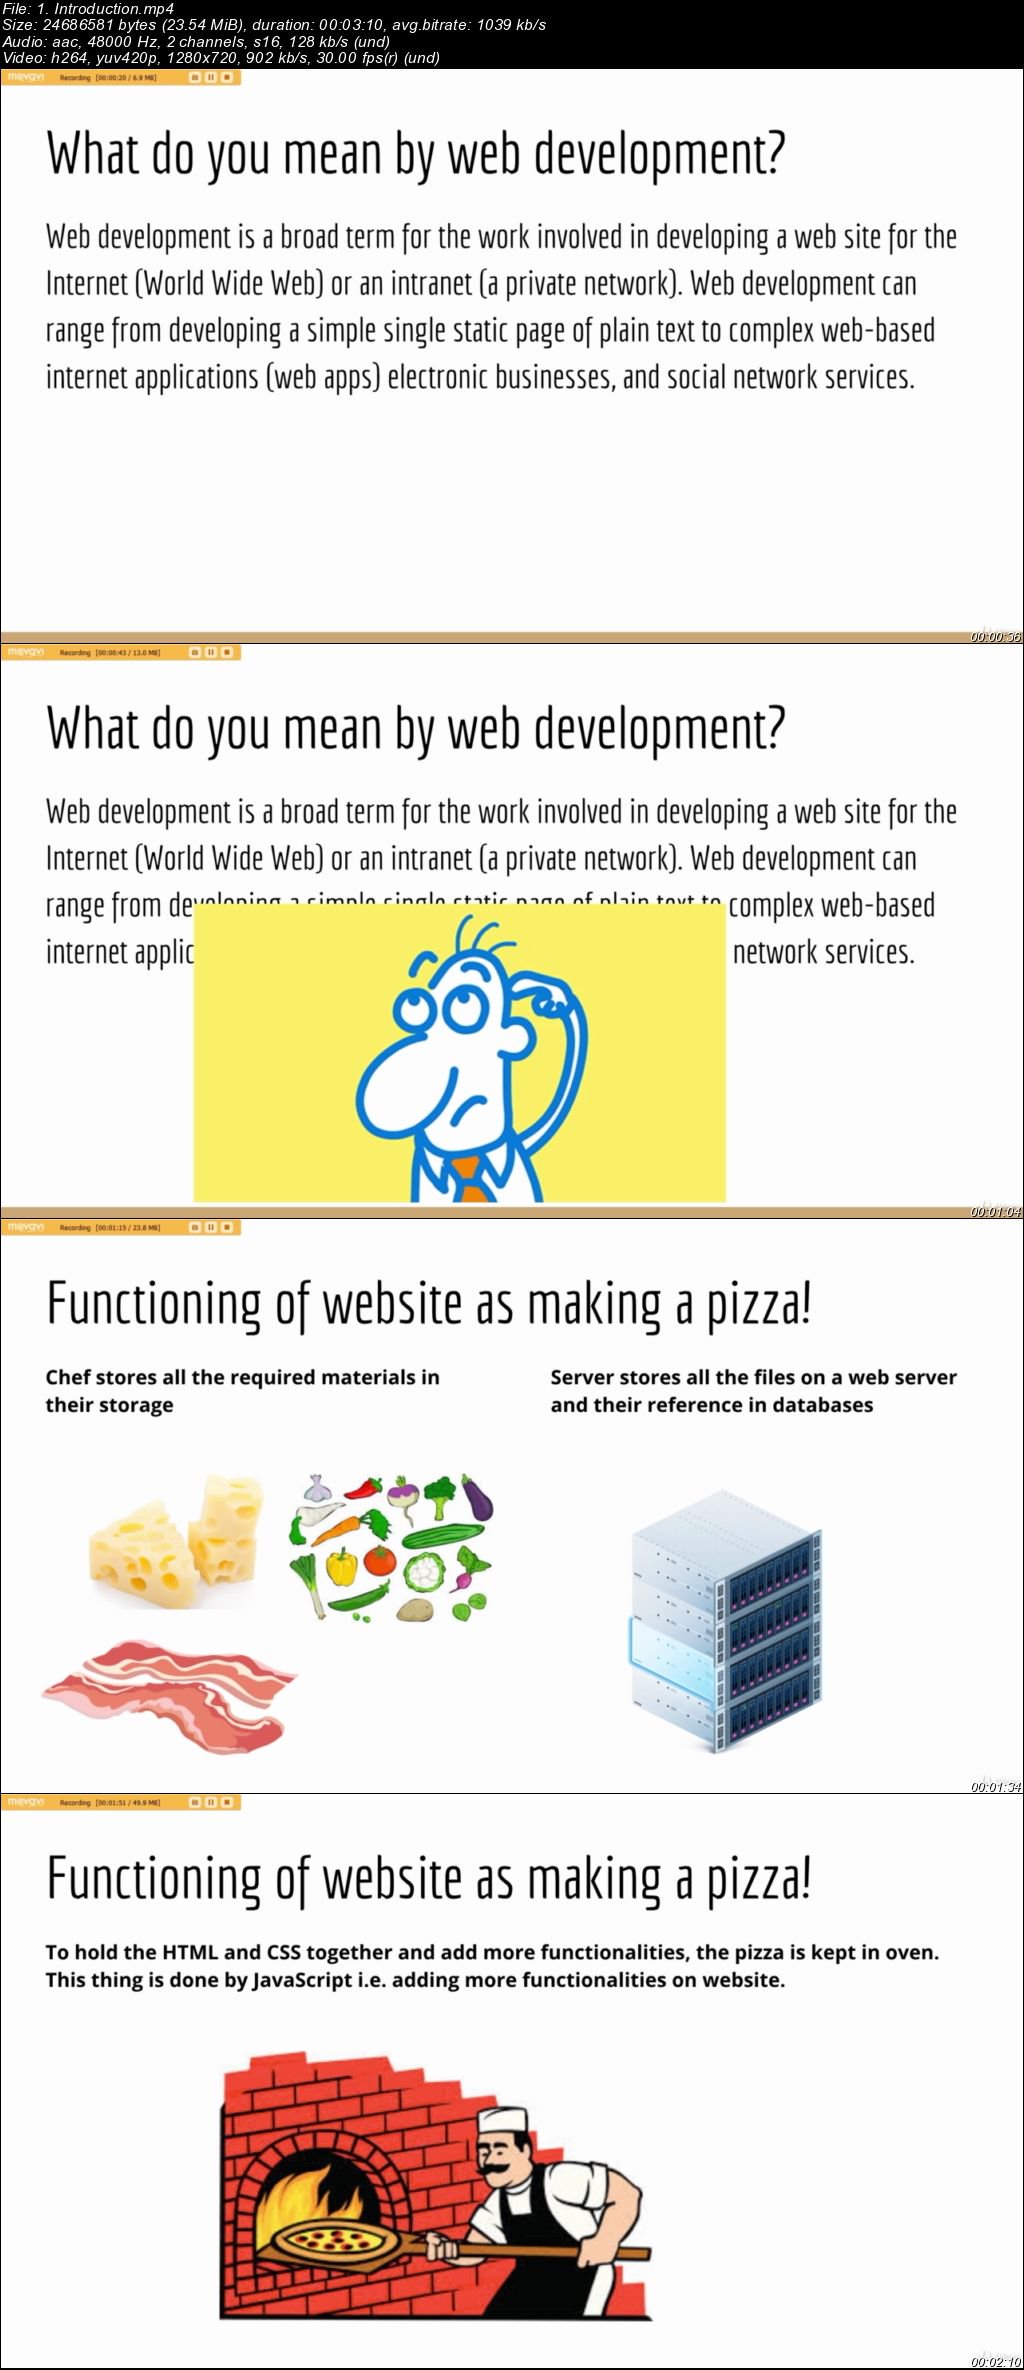  Learn Basics of Web Development - HTML and CSS 